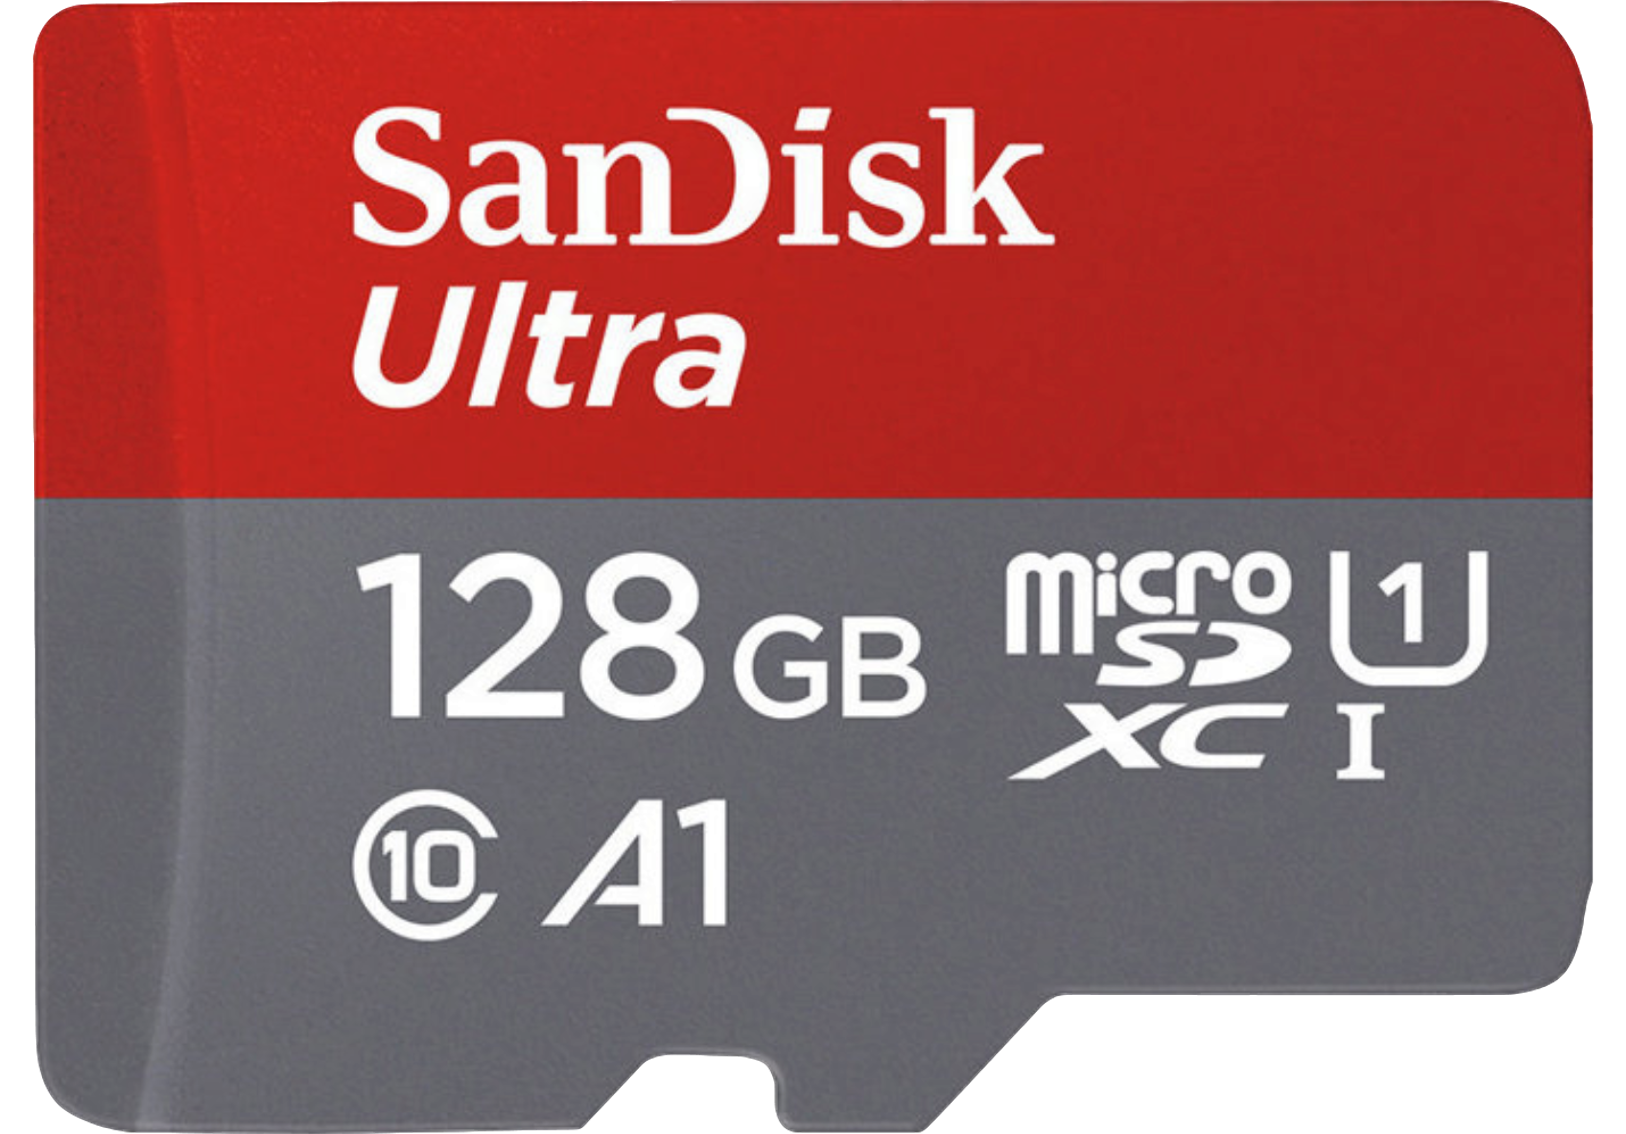 SanDisk Ultra 128GB microSD inkl. adapter